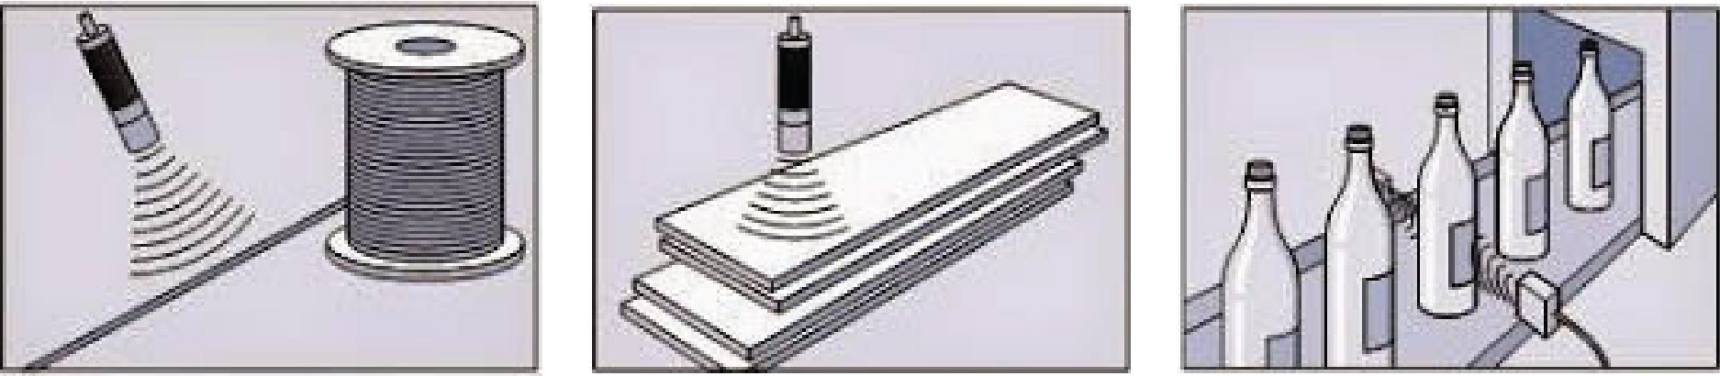 Wire Breakage Monitoring 5cm Blind Spot Reflective Structure Design Industrial Ultrasonic Level Sensor